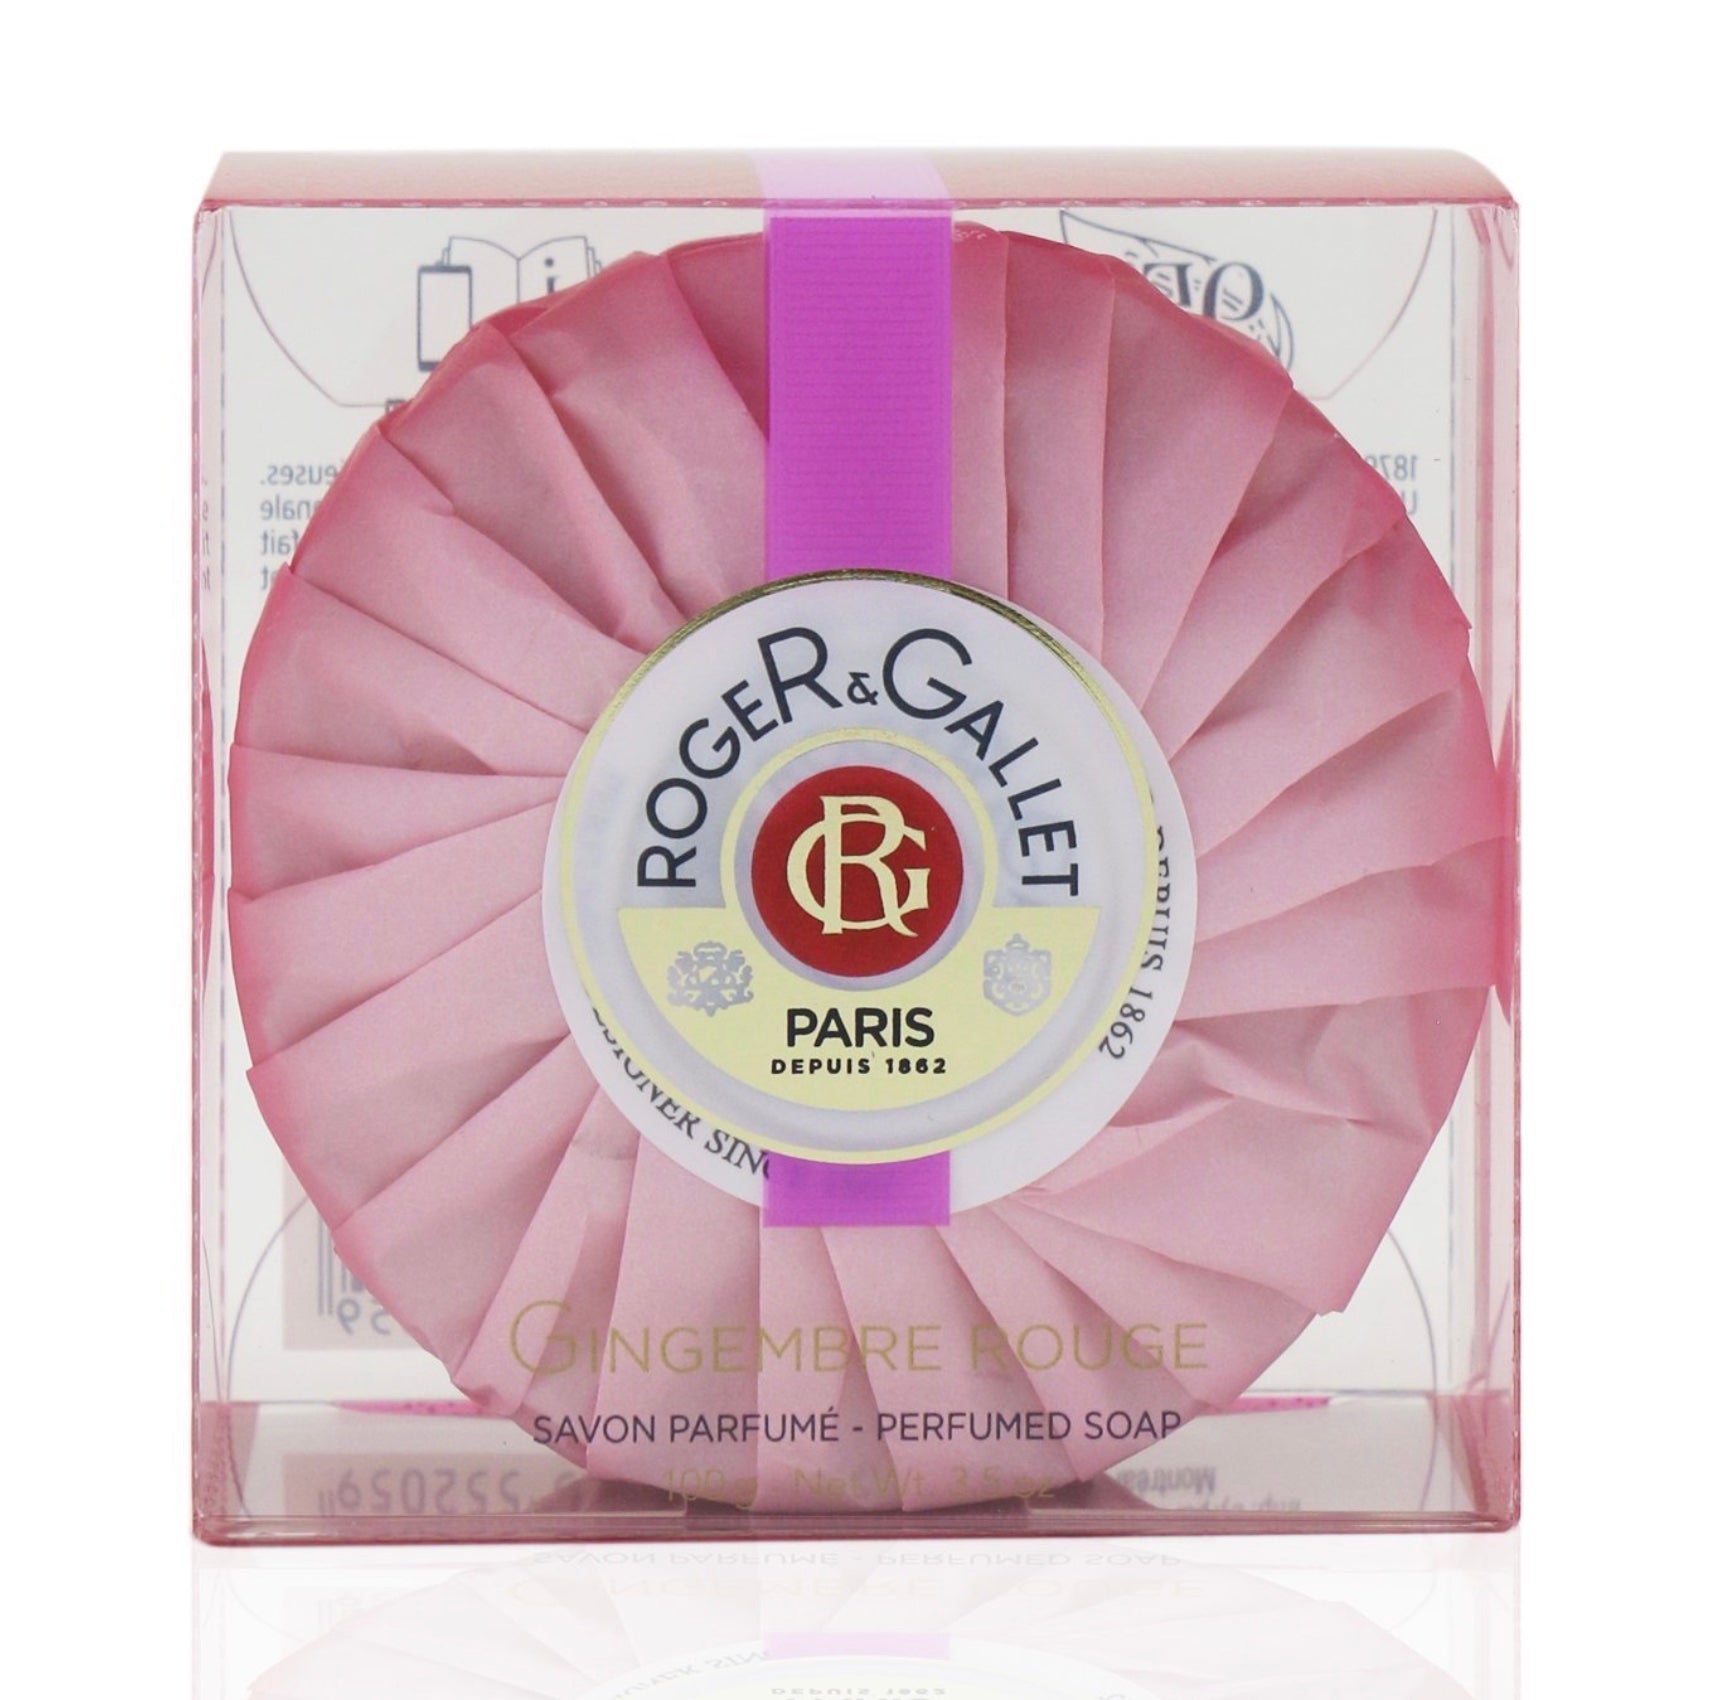 Roger & Gallet Fleur Gingembre Rouge Soap